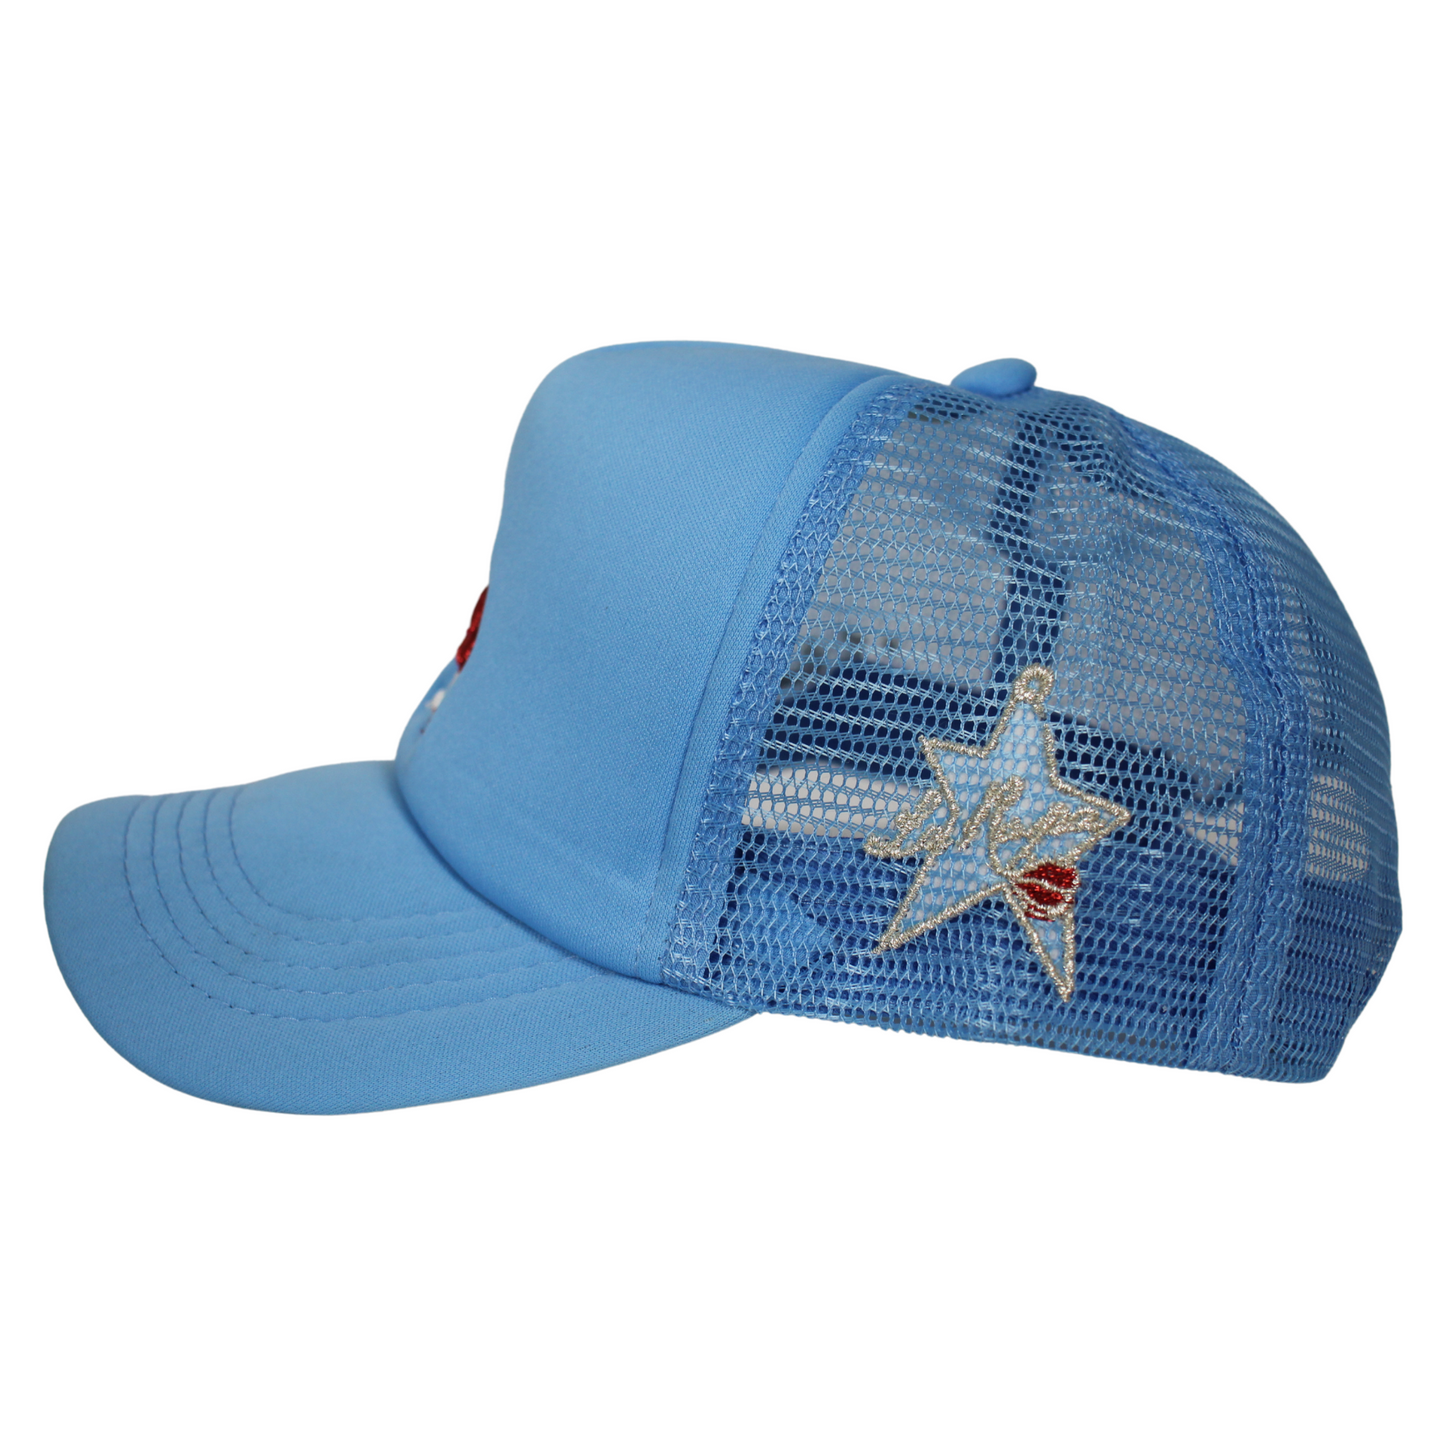 La Ropa LA Trucker Hat (Carolina Blue)